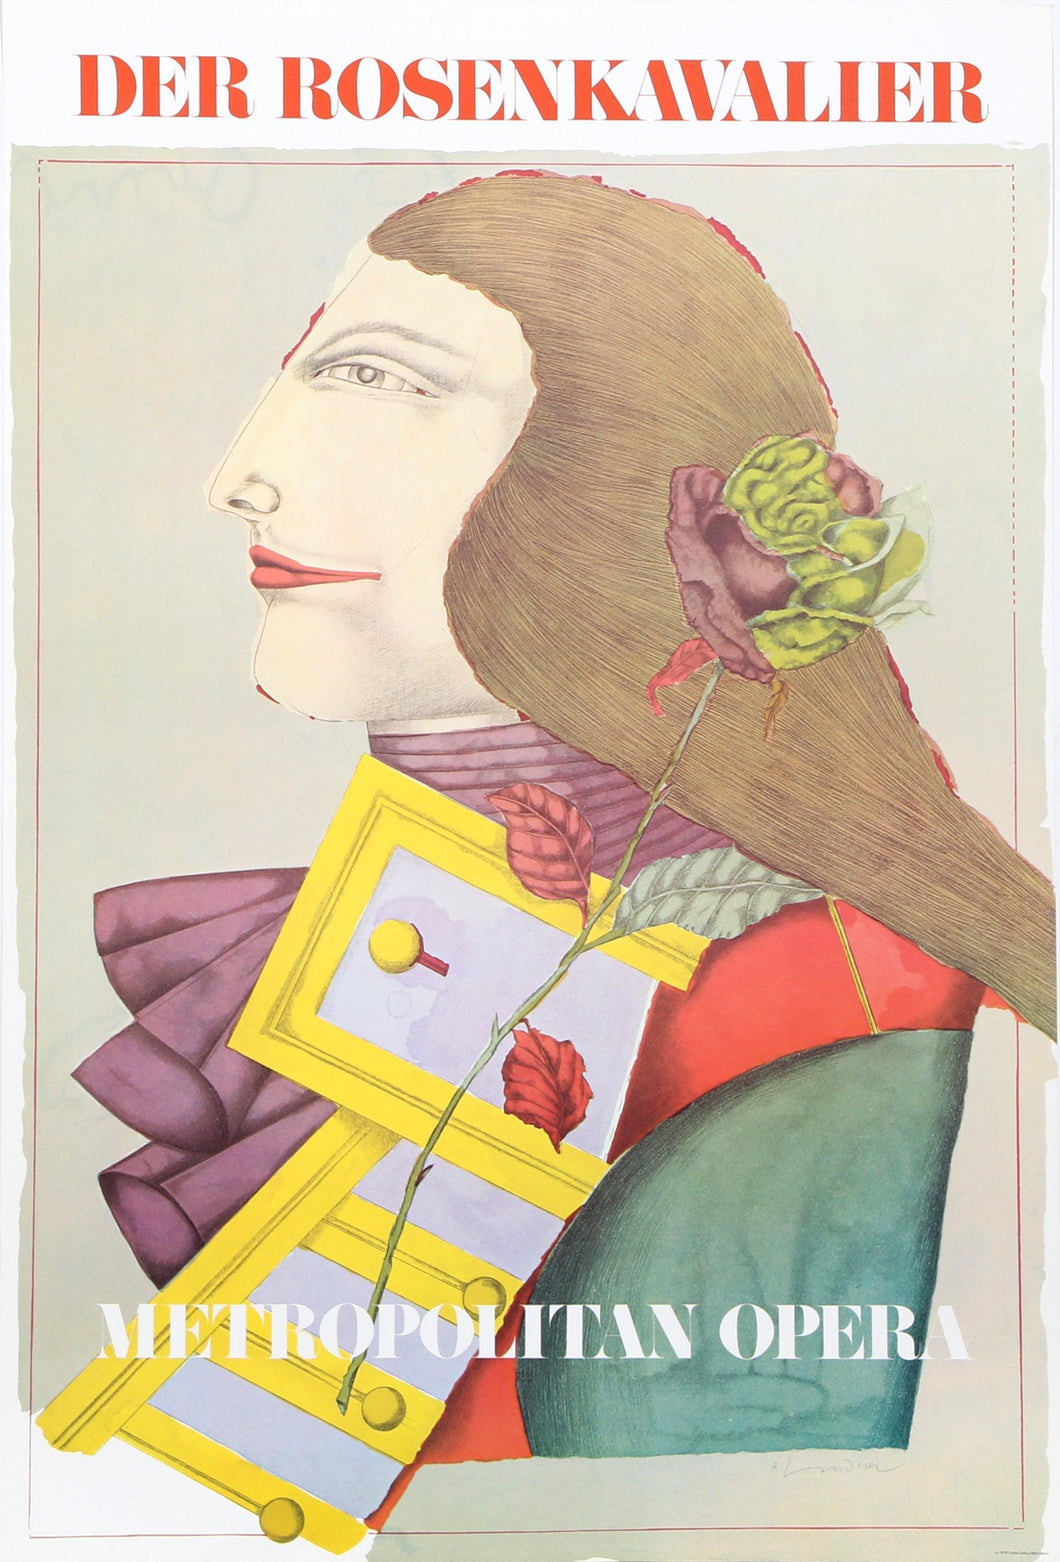 Der Rosenkavalier (Metropolitan Opera) Poster | Richard Lindner,{{product.type}}